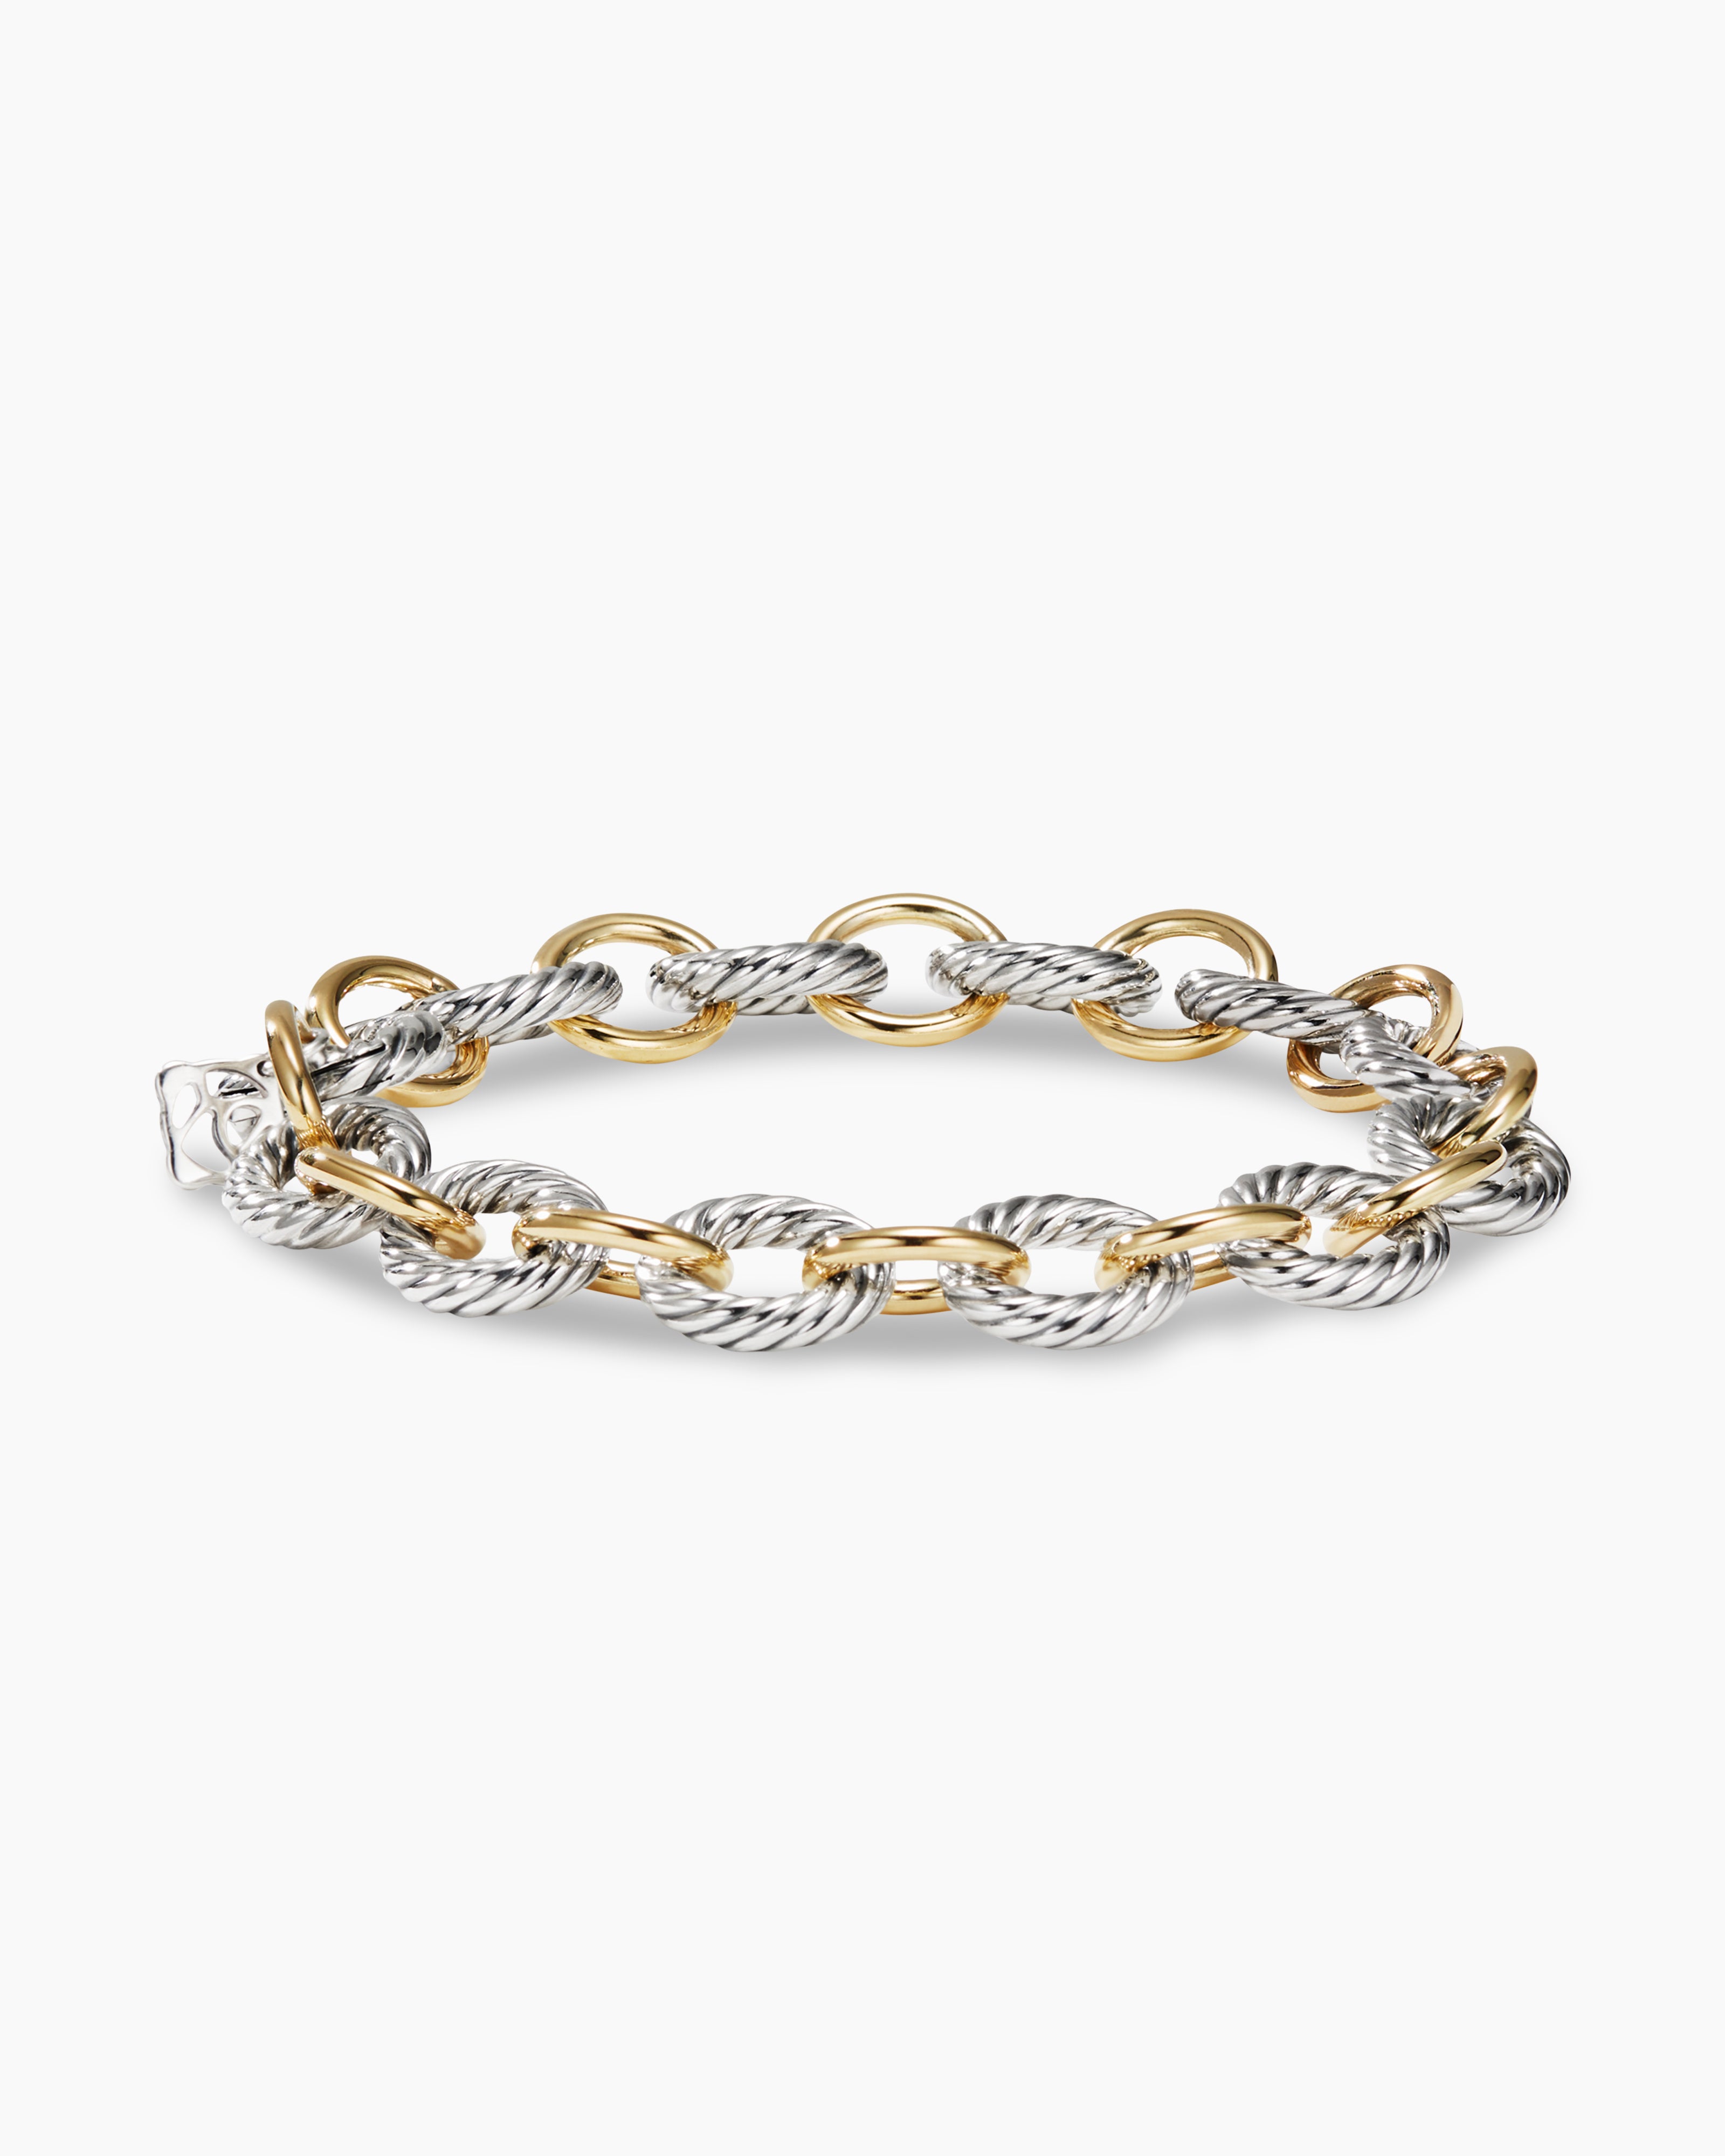 David Yurman Oval Link Chain Bracelet in Sterling Silver with 18K Yellow Gold, 10mm Women's Size 8 IN